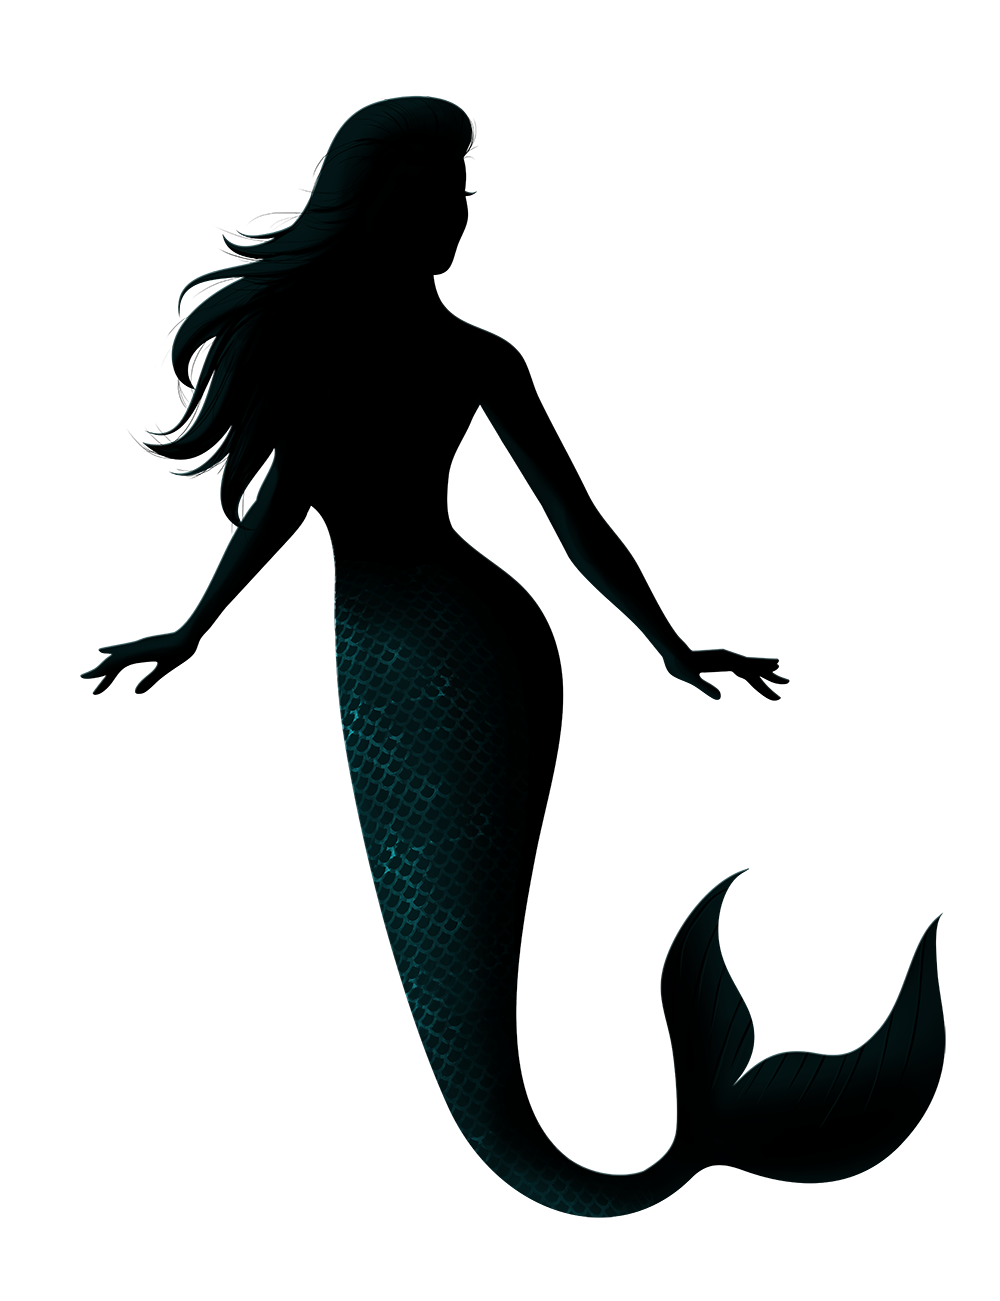 Mermaid PNG Image File